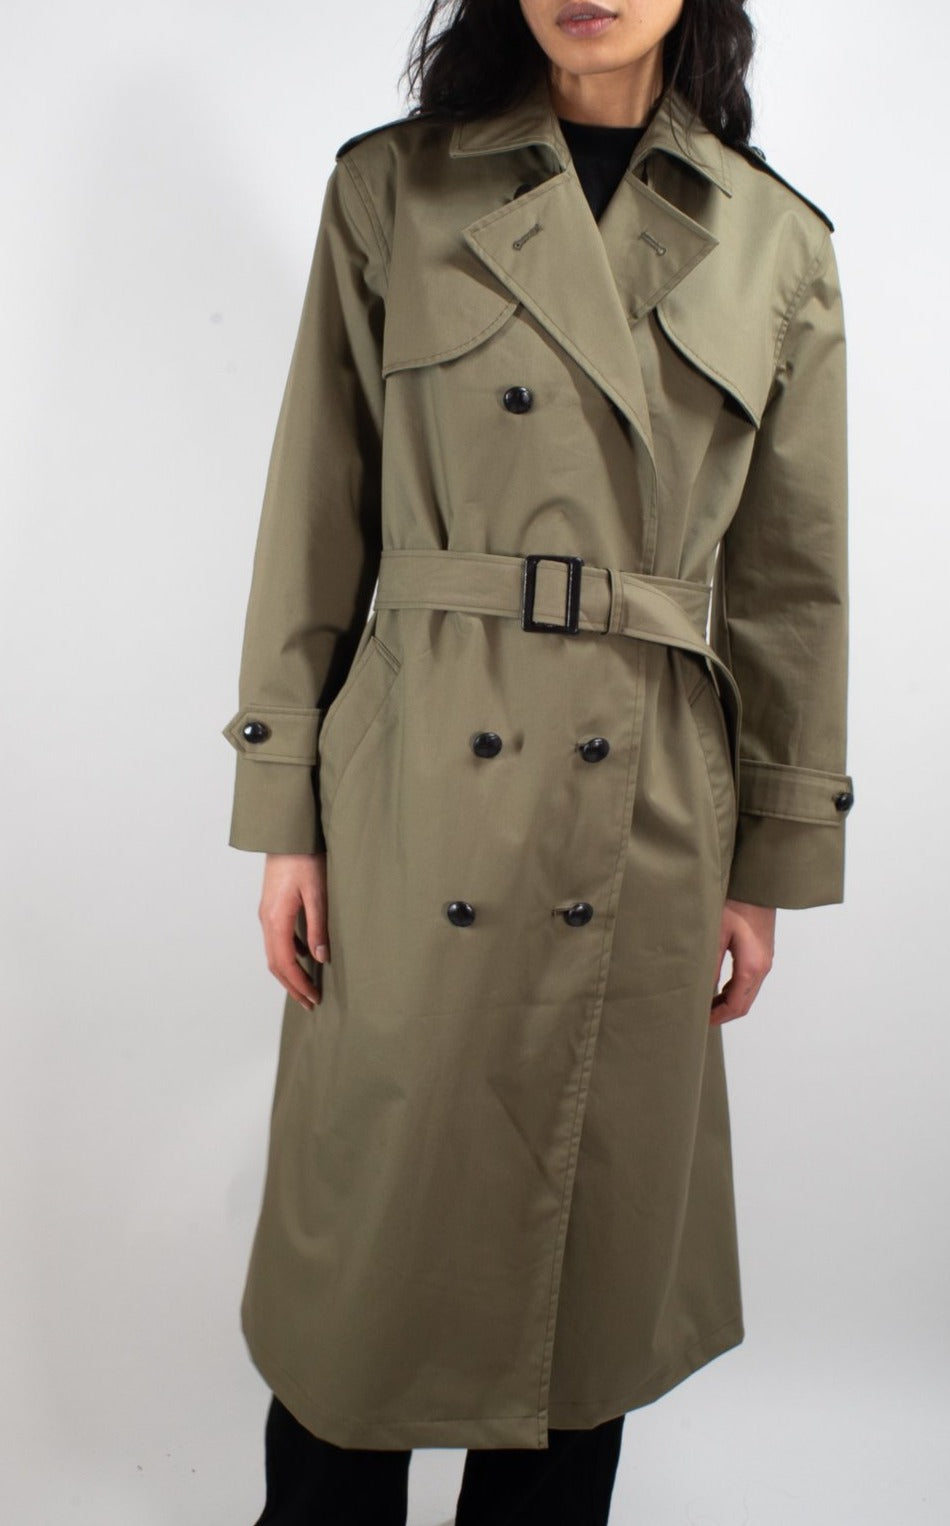 Genuine Army | Military Surplus Clothing and Kit UK